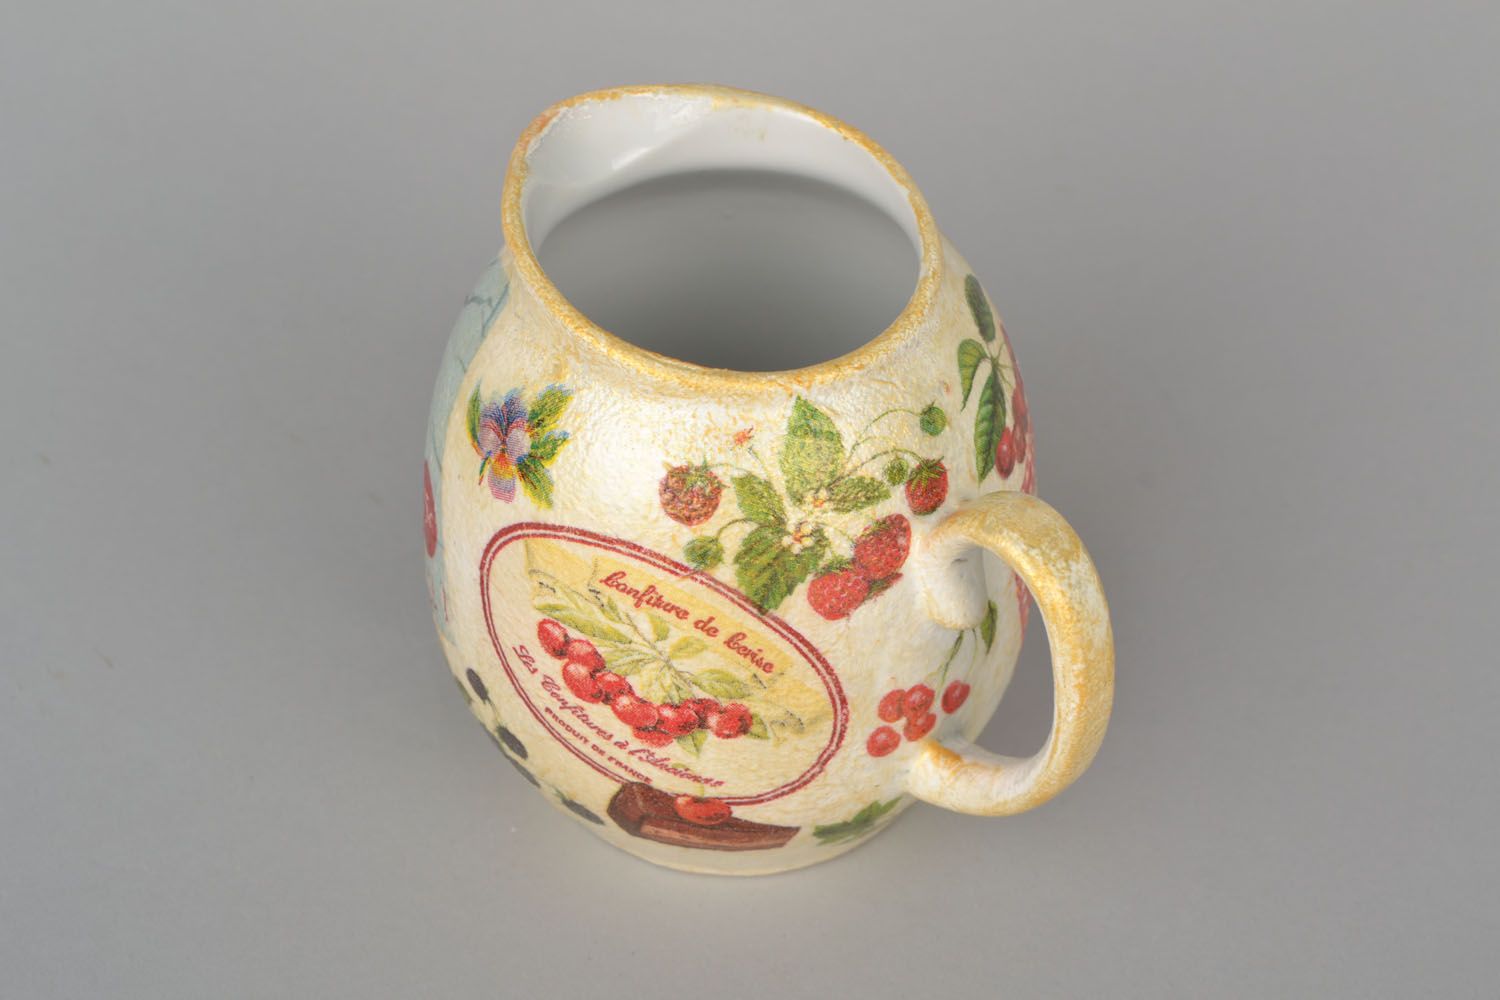 8 oz ceramic creamer jug with handle and decoupage design 0,5 lb photo 5